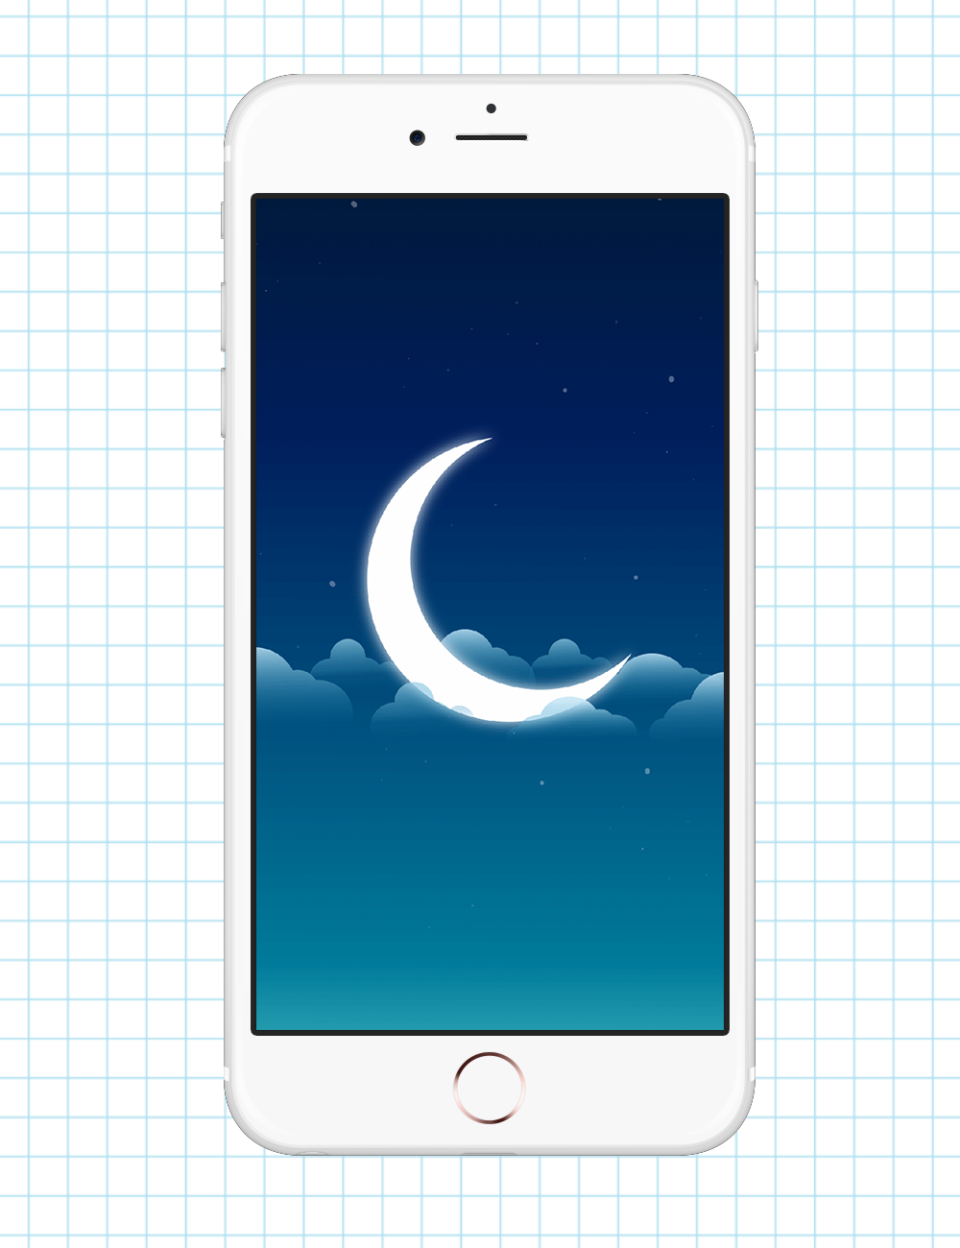 slumber app on iphone